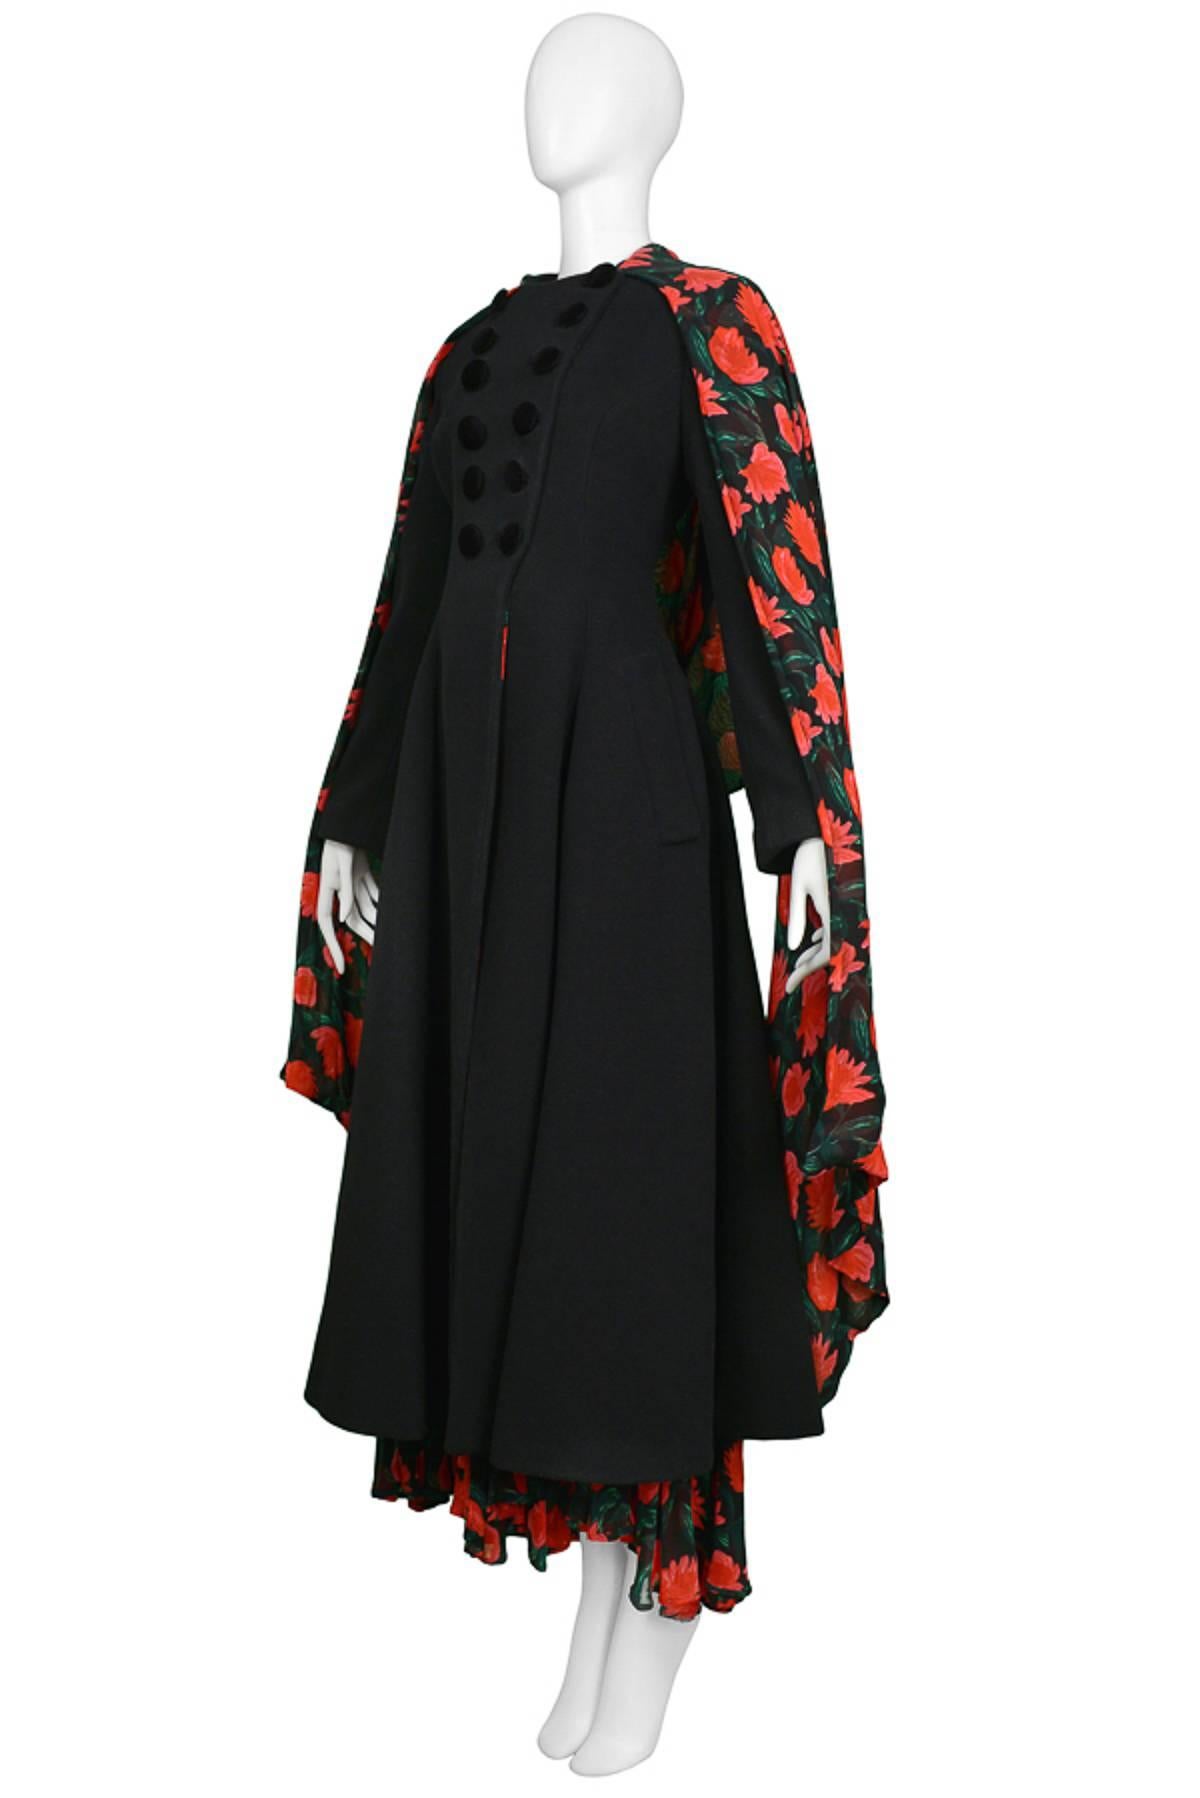 Dolce & Gabbana Black Wool and Velvet Floral Shawl Coat 1990s 2